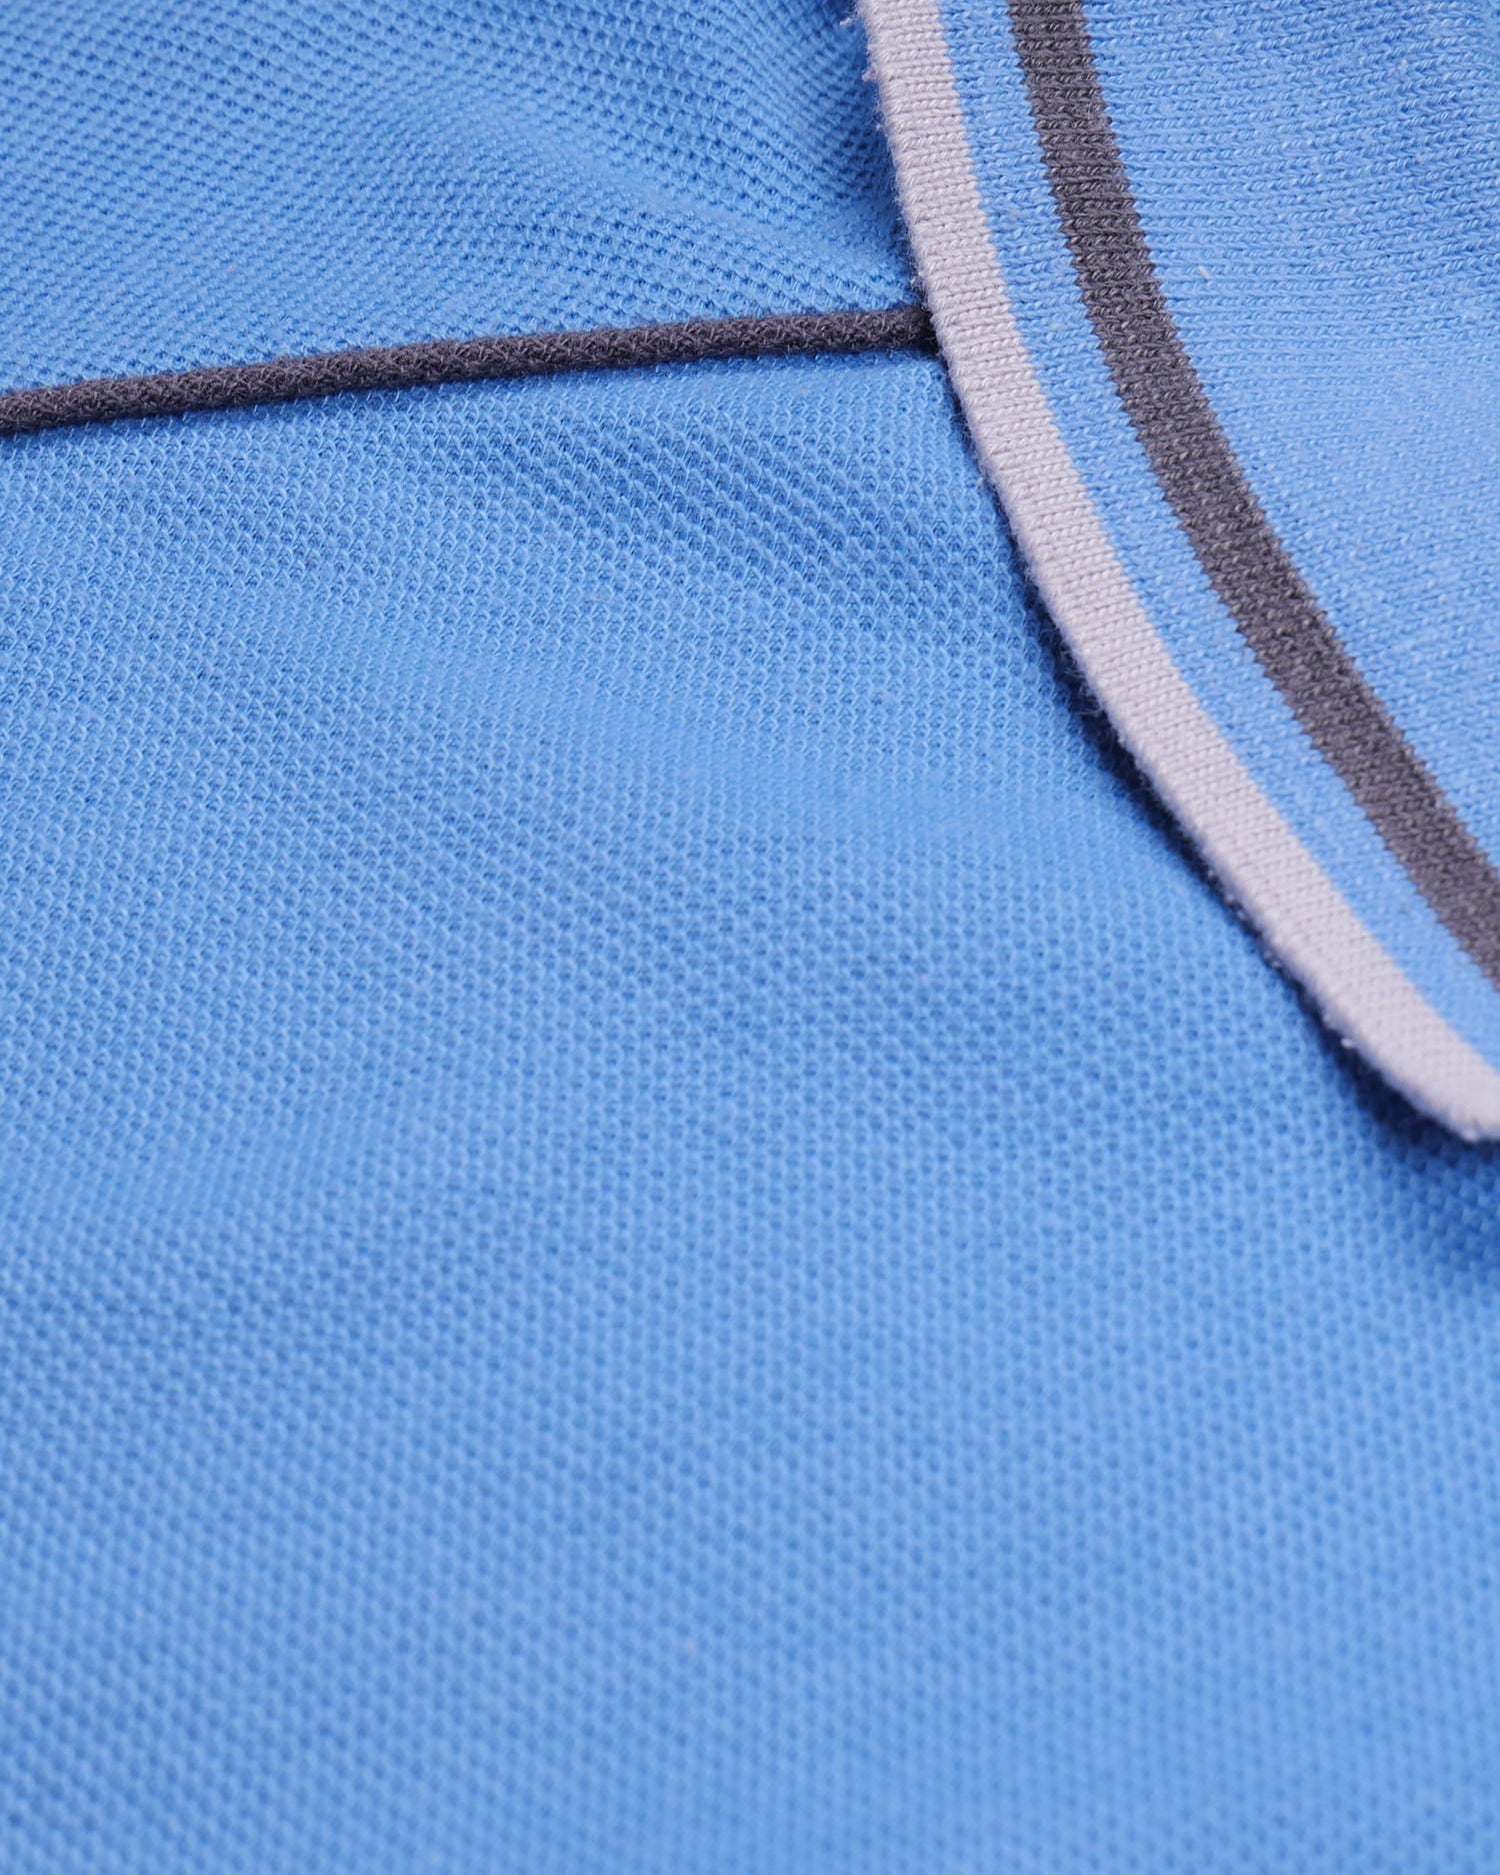 Umbro blau Polo Shirt - Peeces